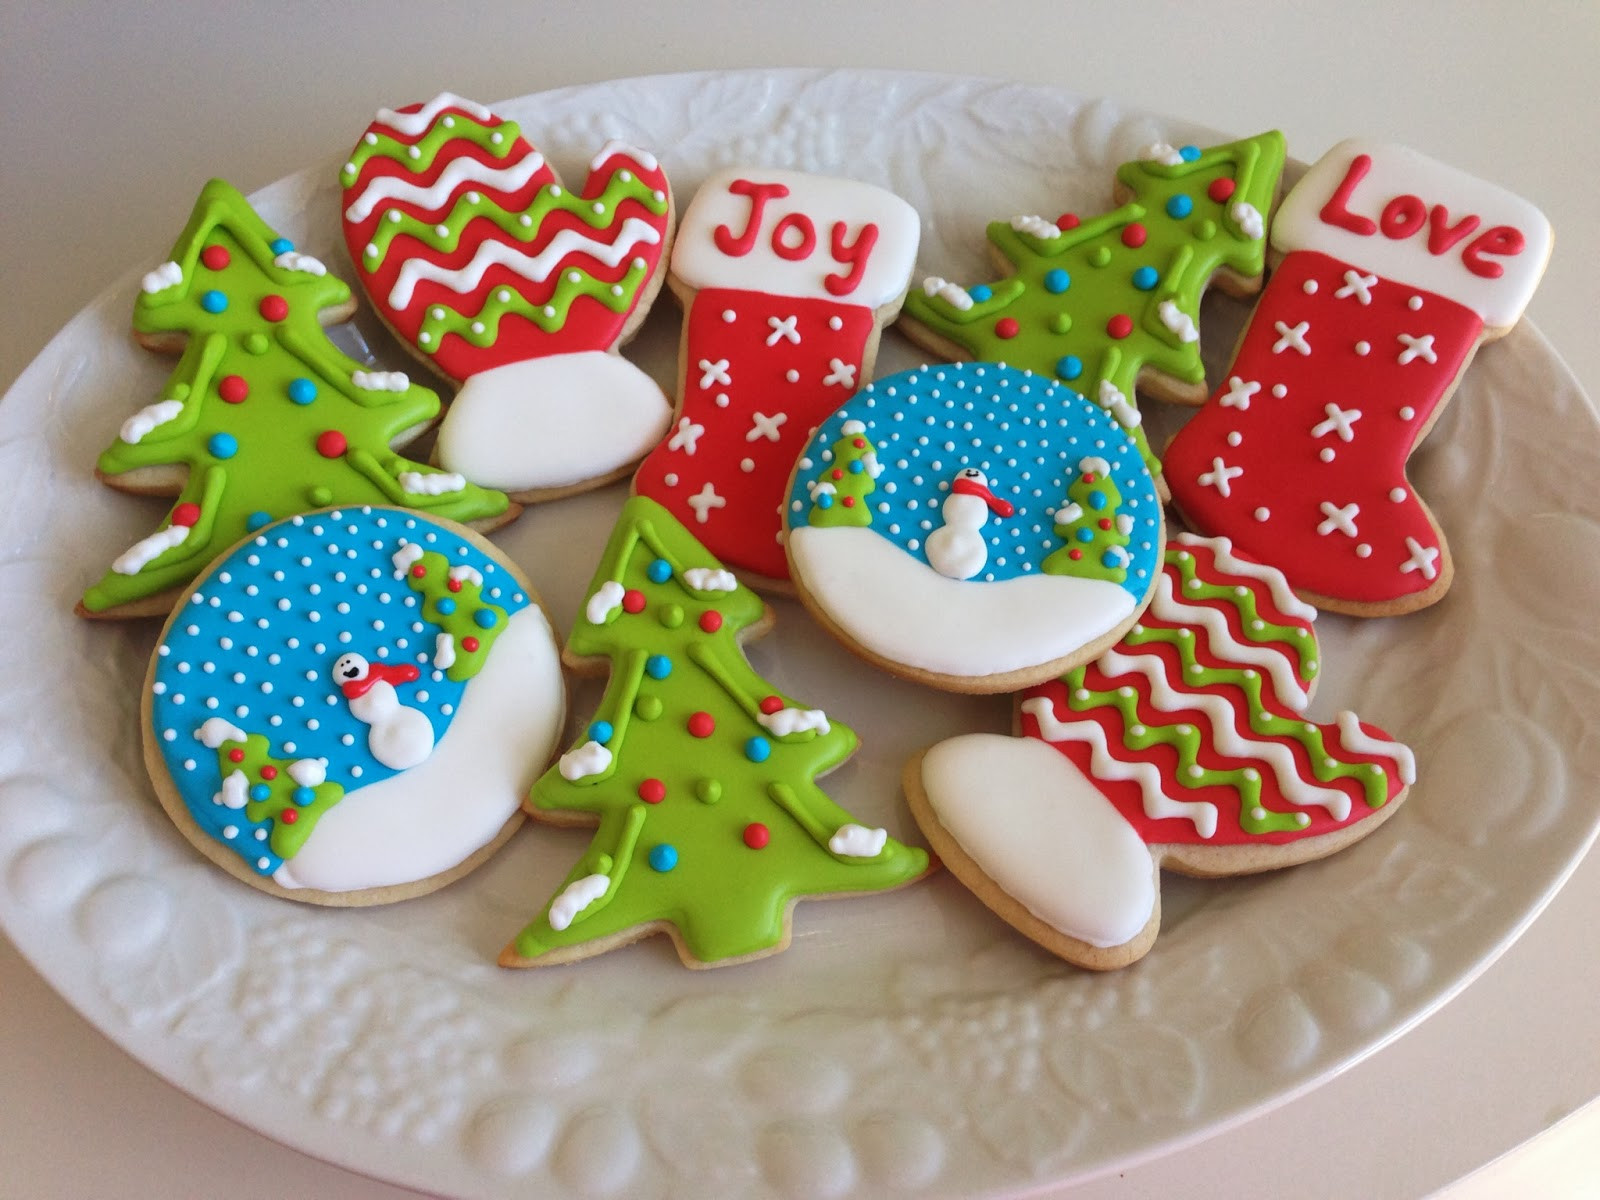 Christmas Sugar Cookies With Royal Icing
 monograms & cake Christmas Cut Out Sugar Cookies with